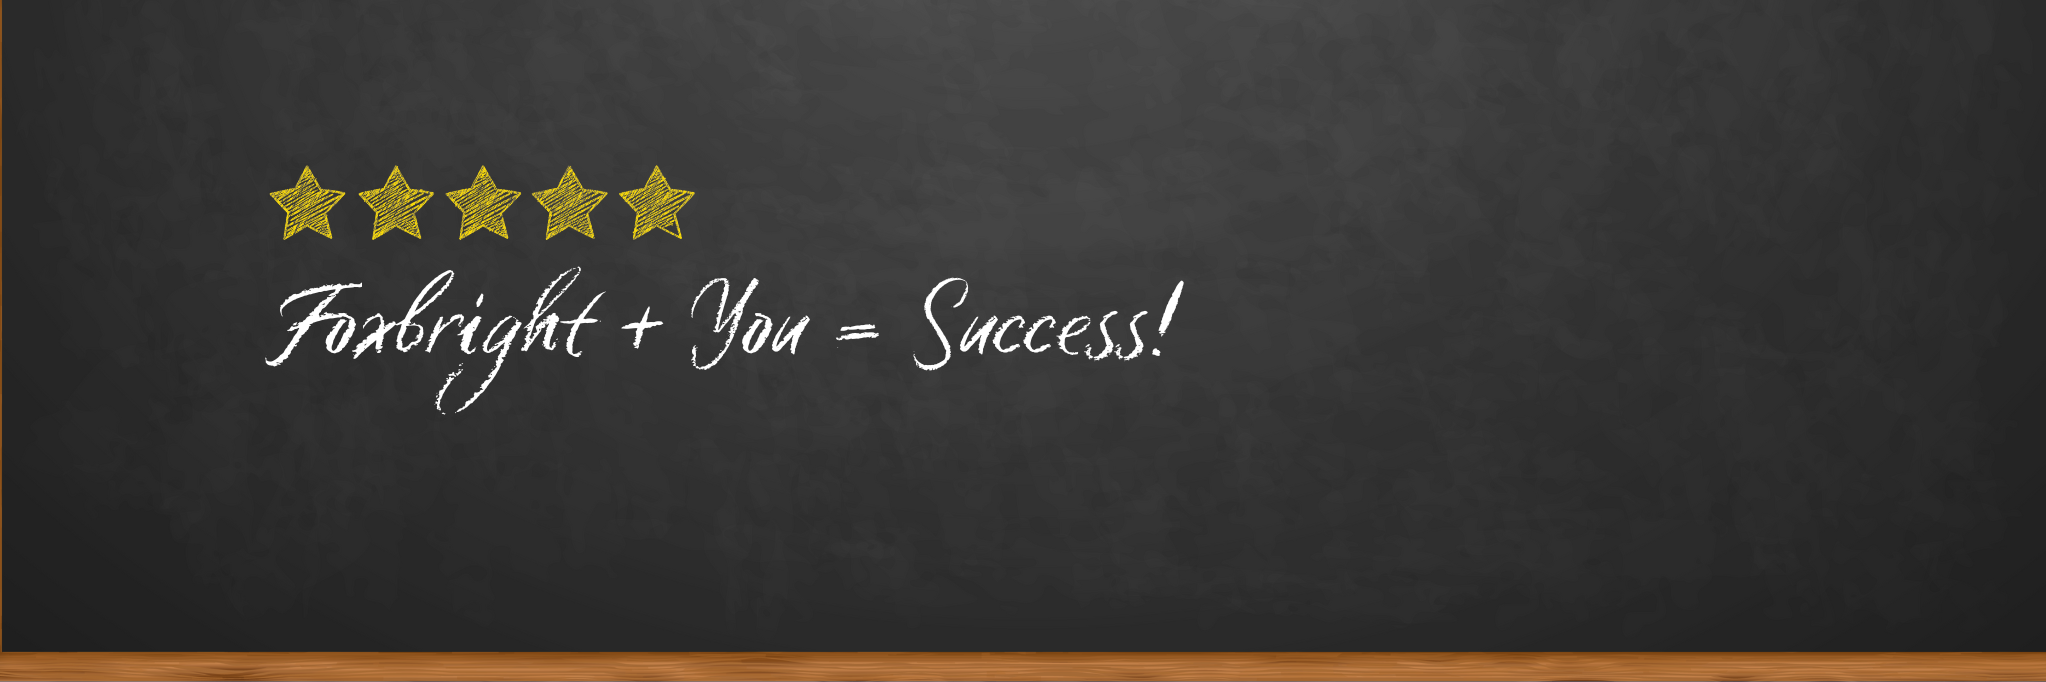 Foxbright + You = Success!